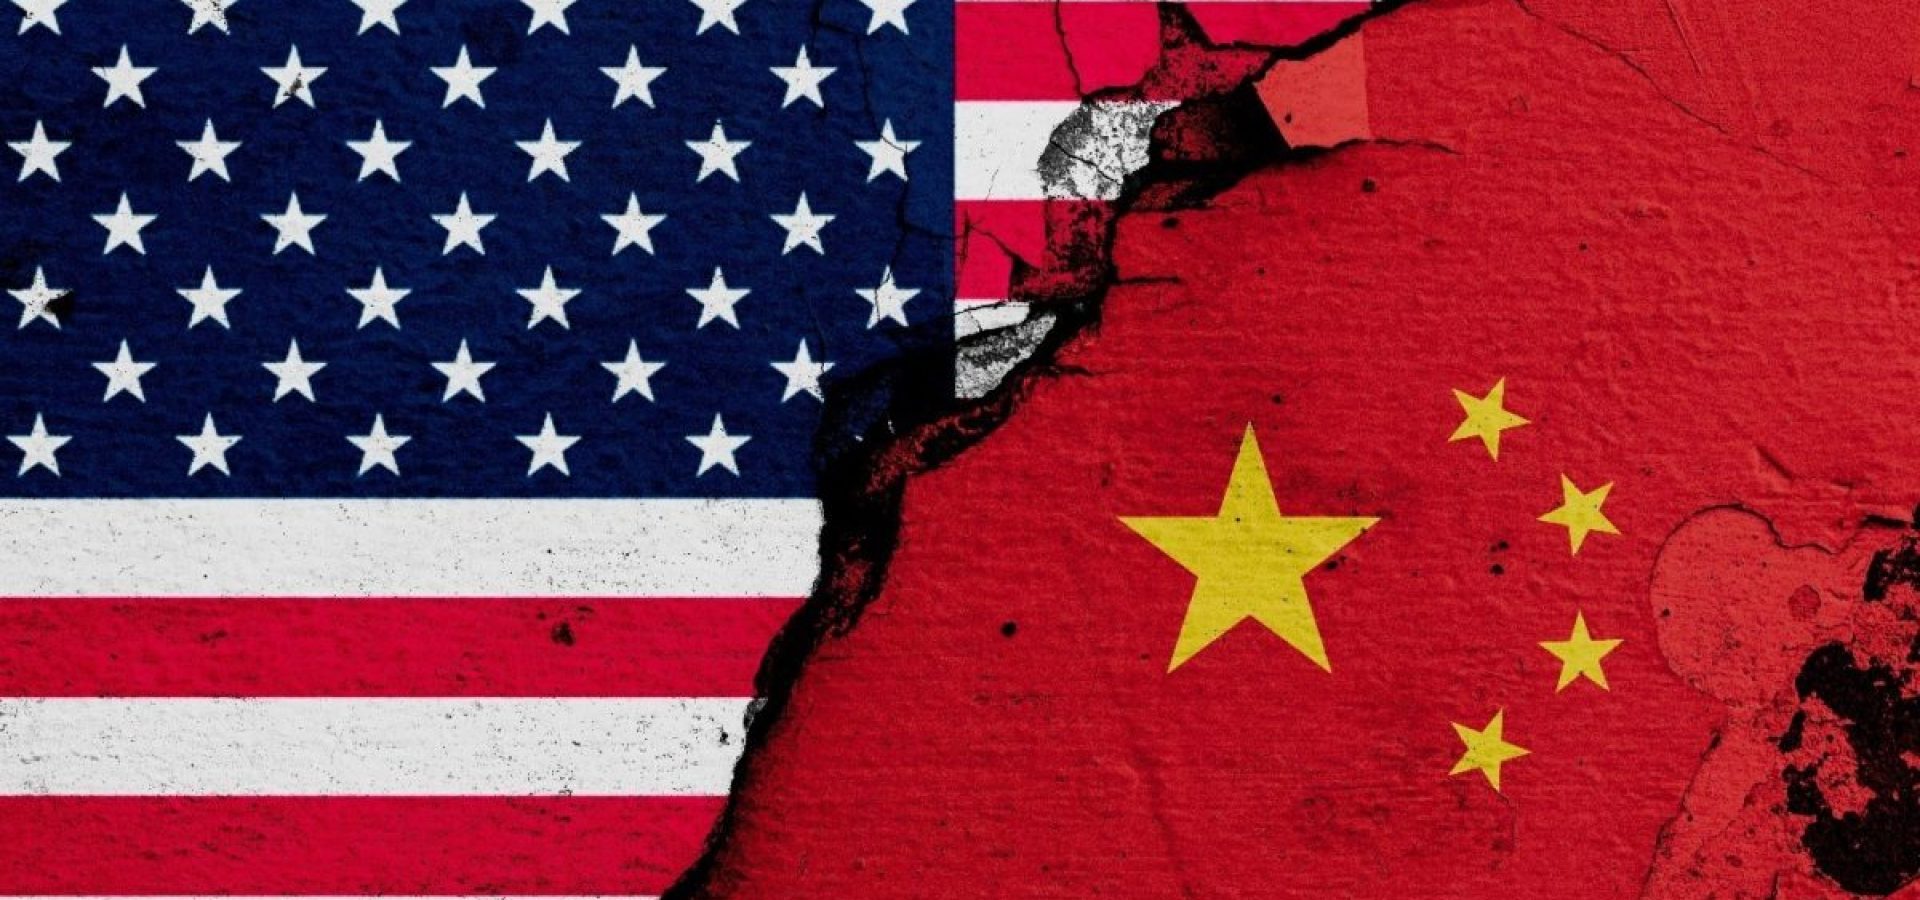 Joe Biden tightens ban on U.S. investments in China